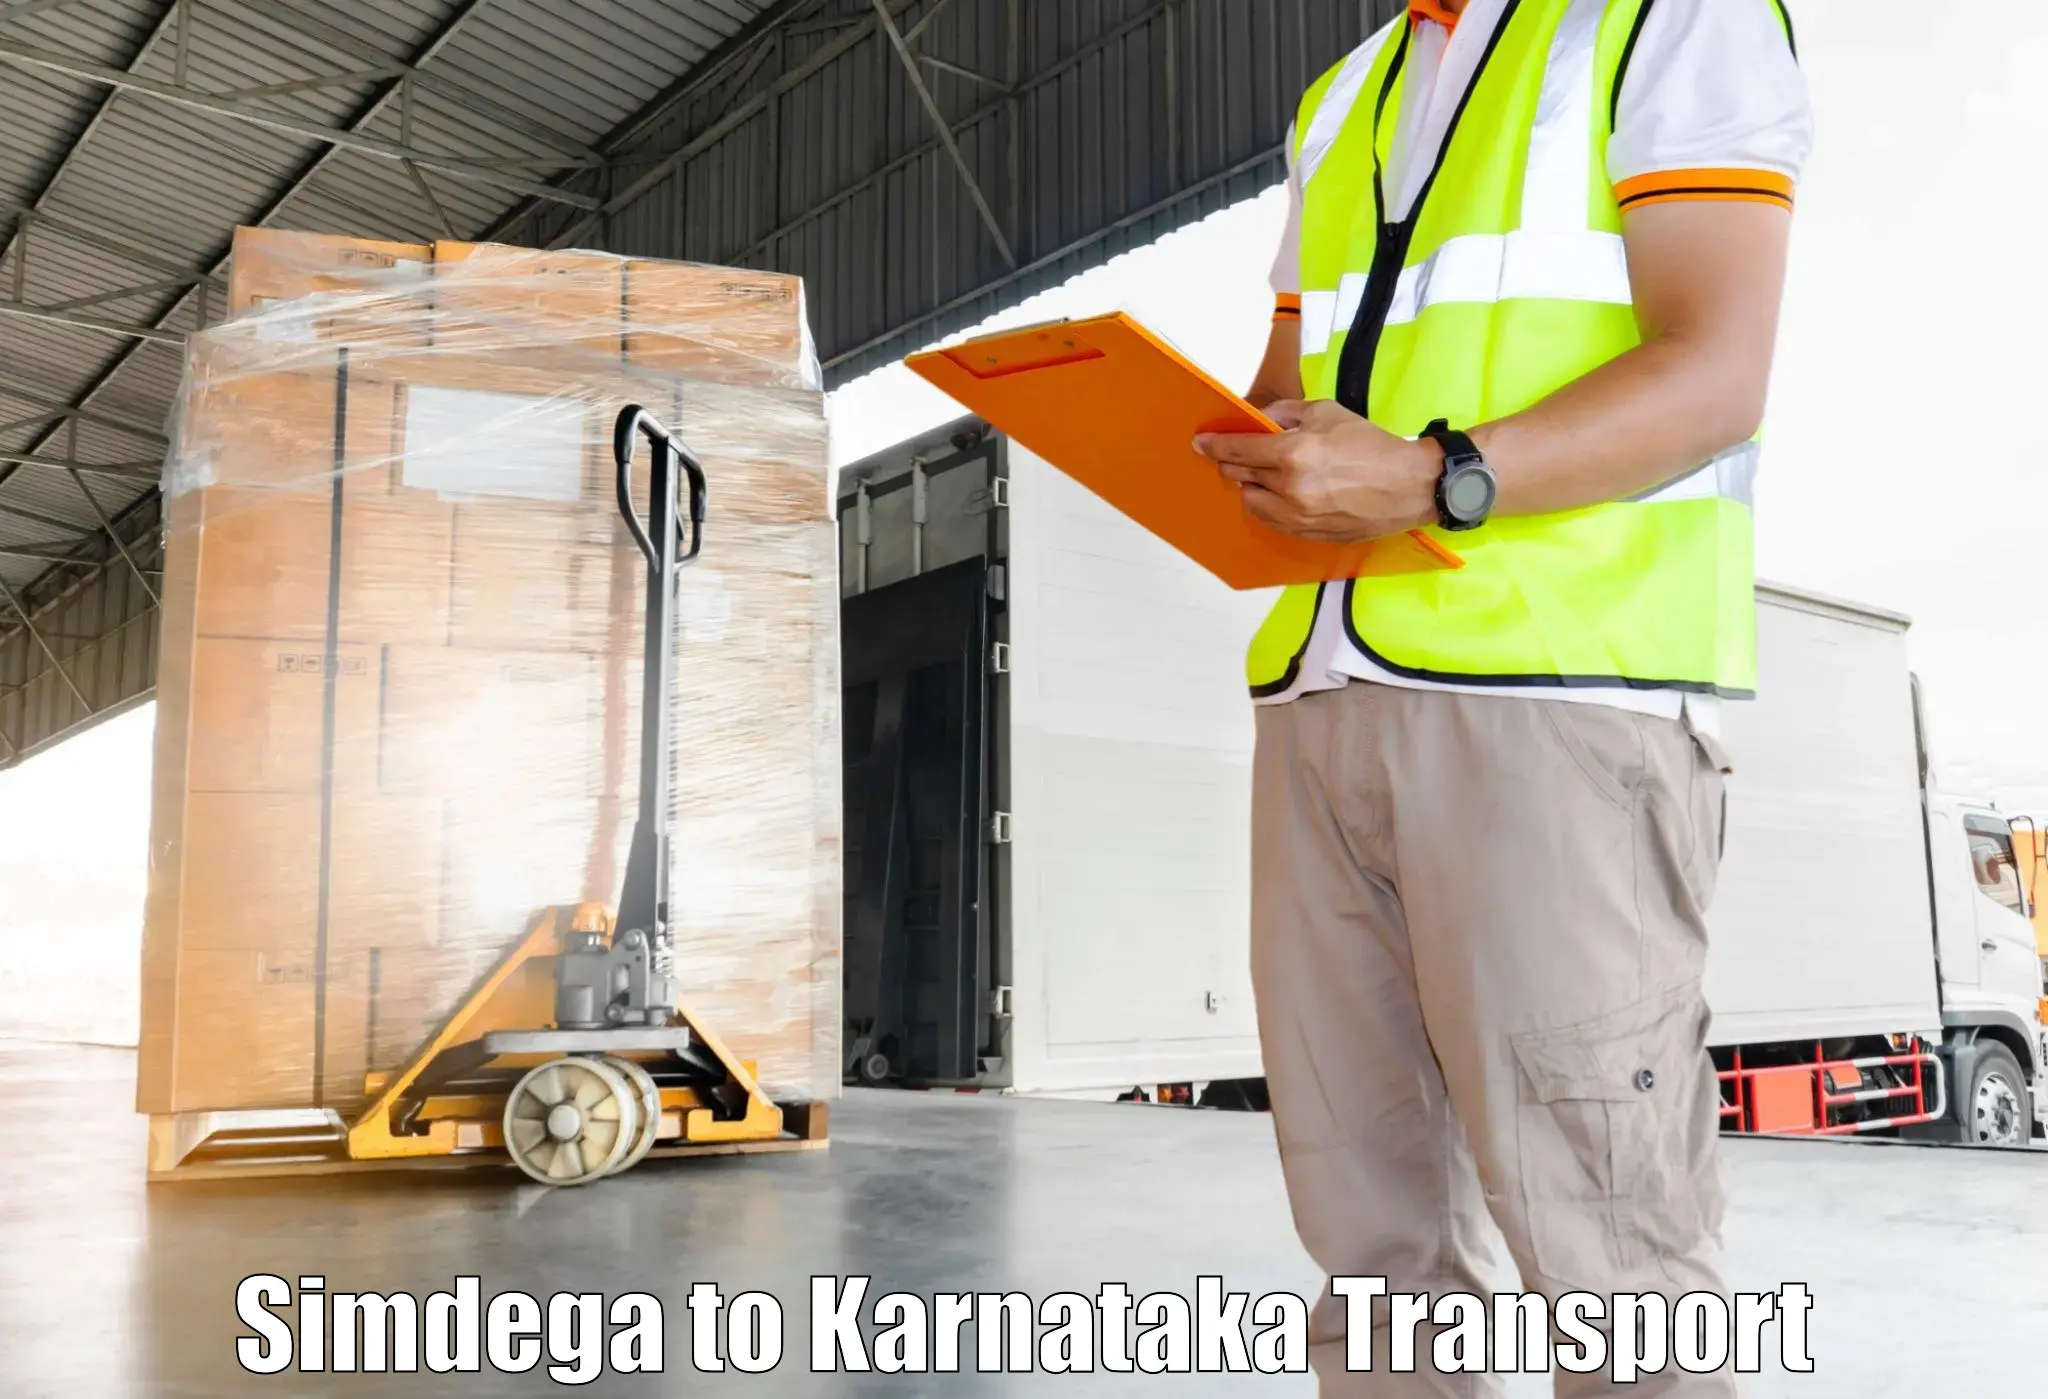 Furniture transport service Simdega to Karnataka